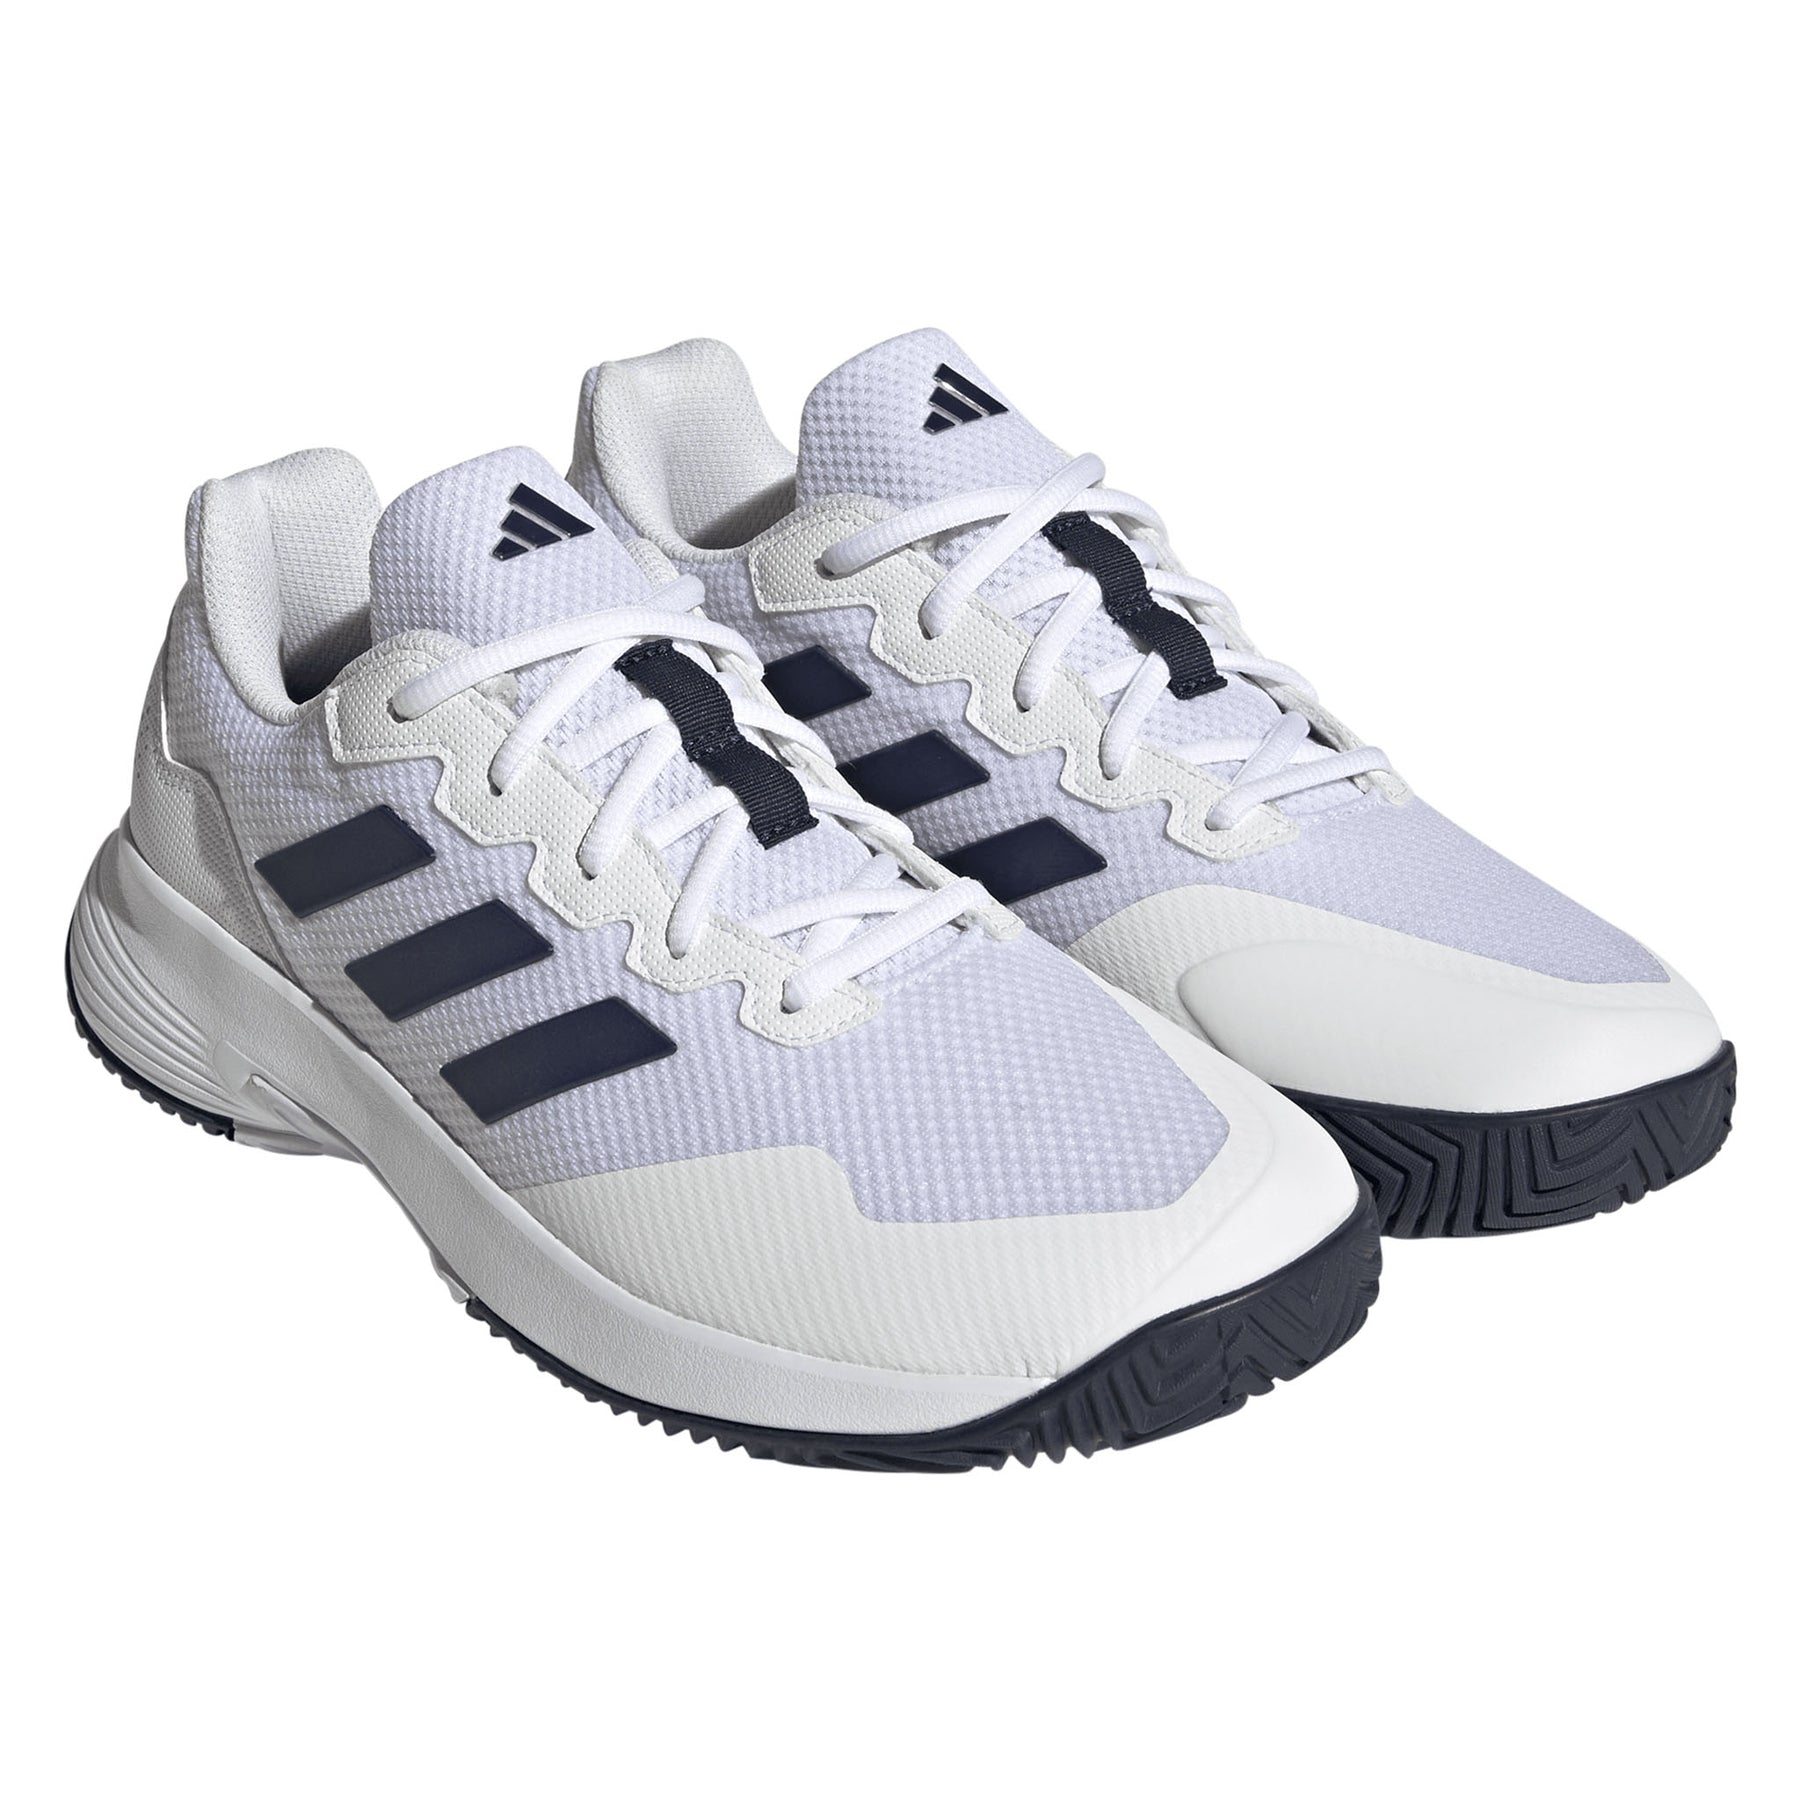 Adidas GameCourt 2 Mens Tennis Shoes: White